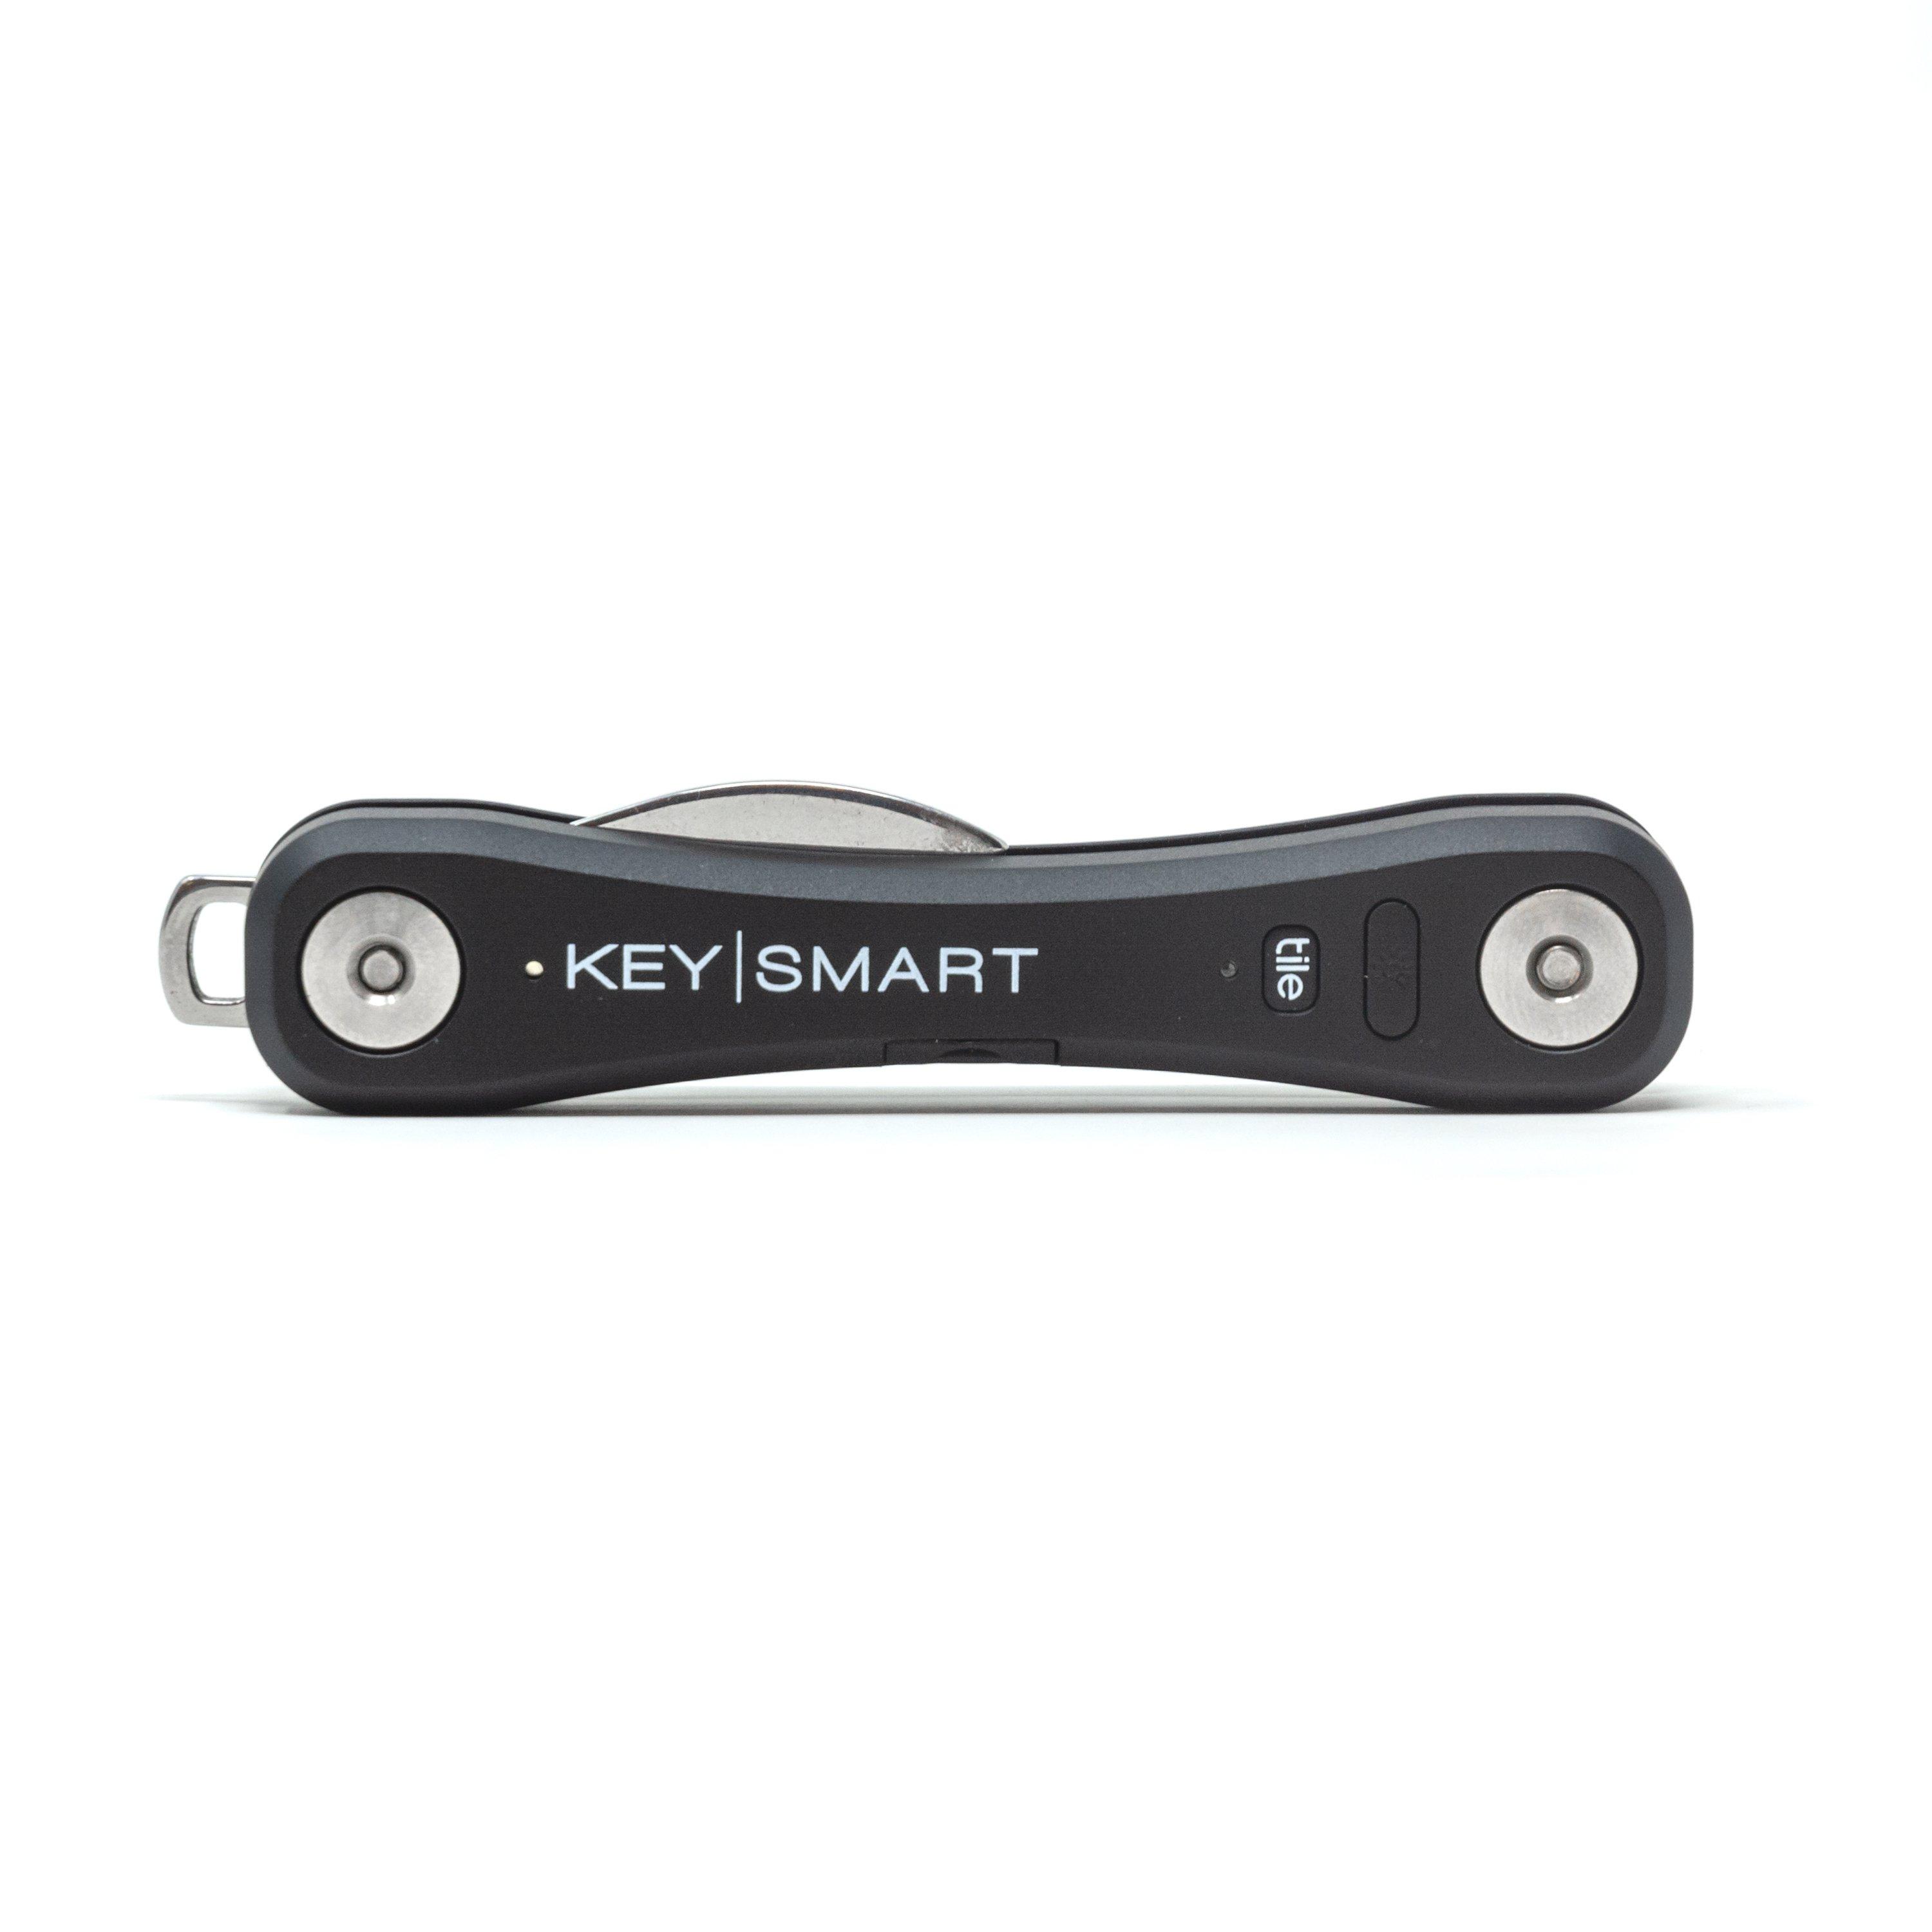 KeySmart Pro with Tile Smart Location